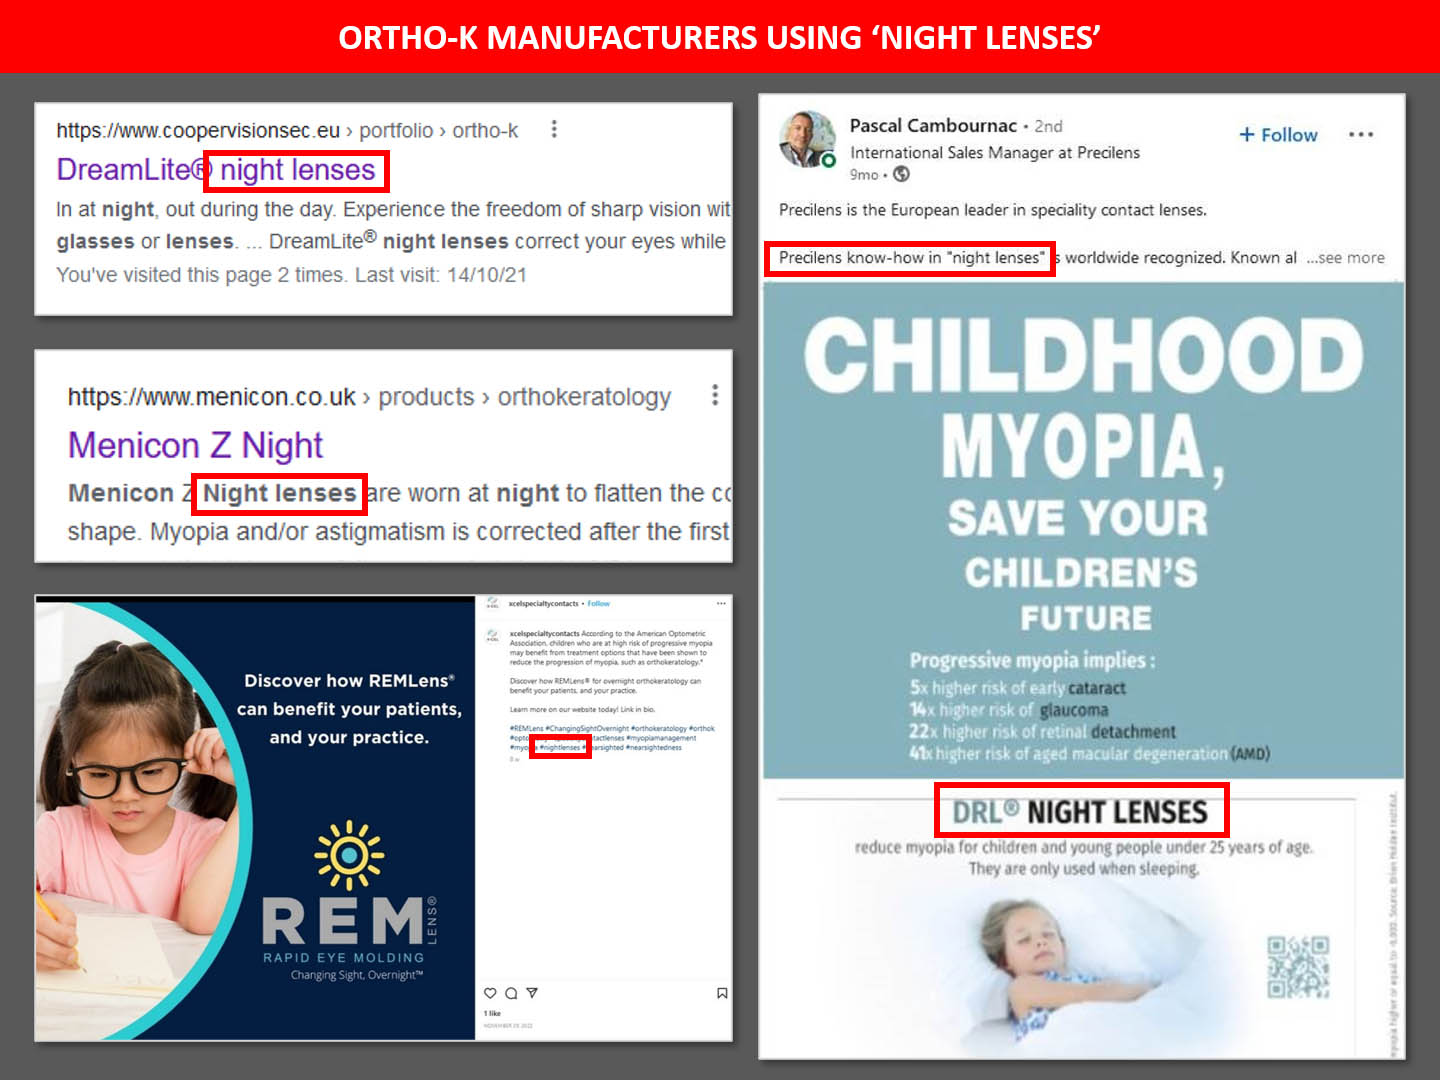 scotlens - Ortho-k manufacturers using night lenses